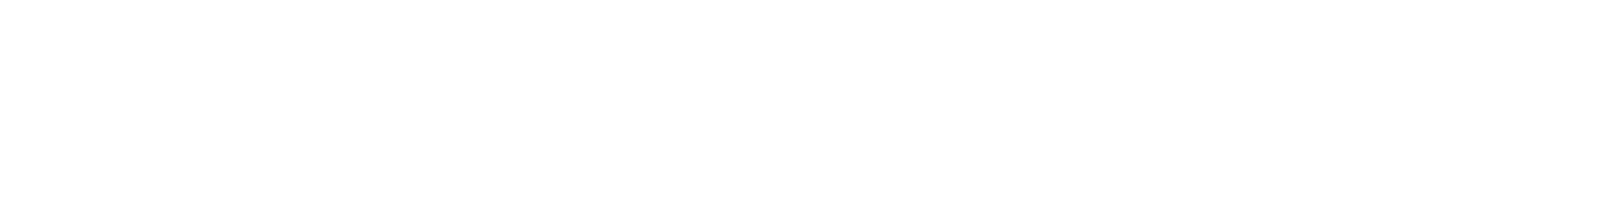 Burberry logo grand pour les fonds sombres (PNG transparent)